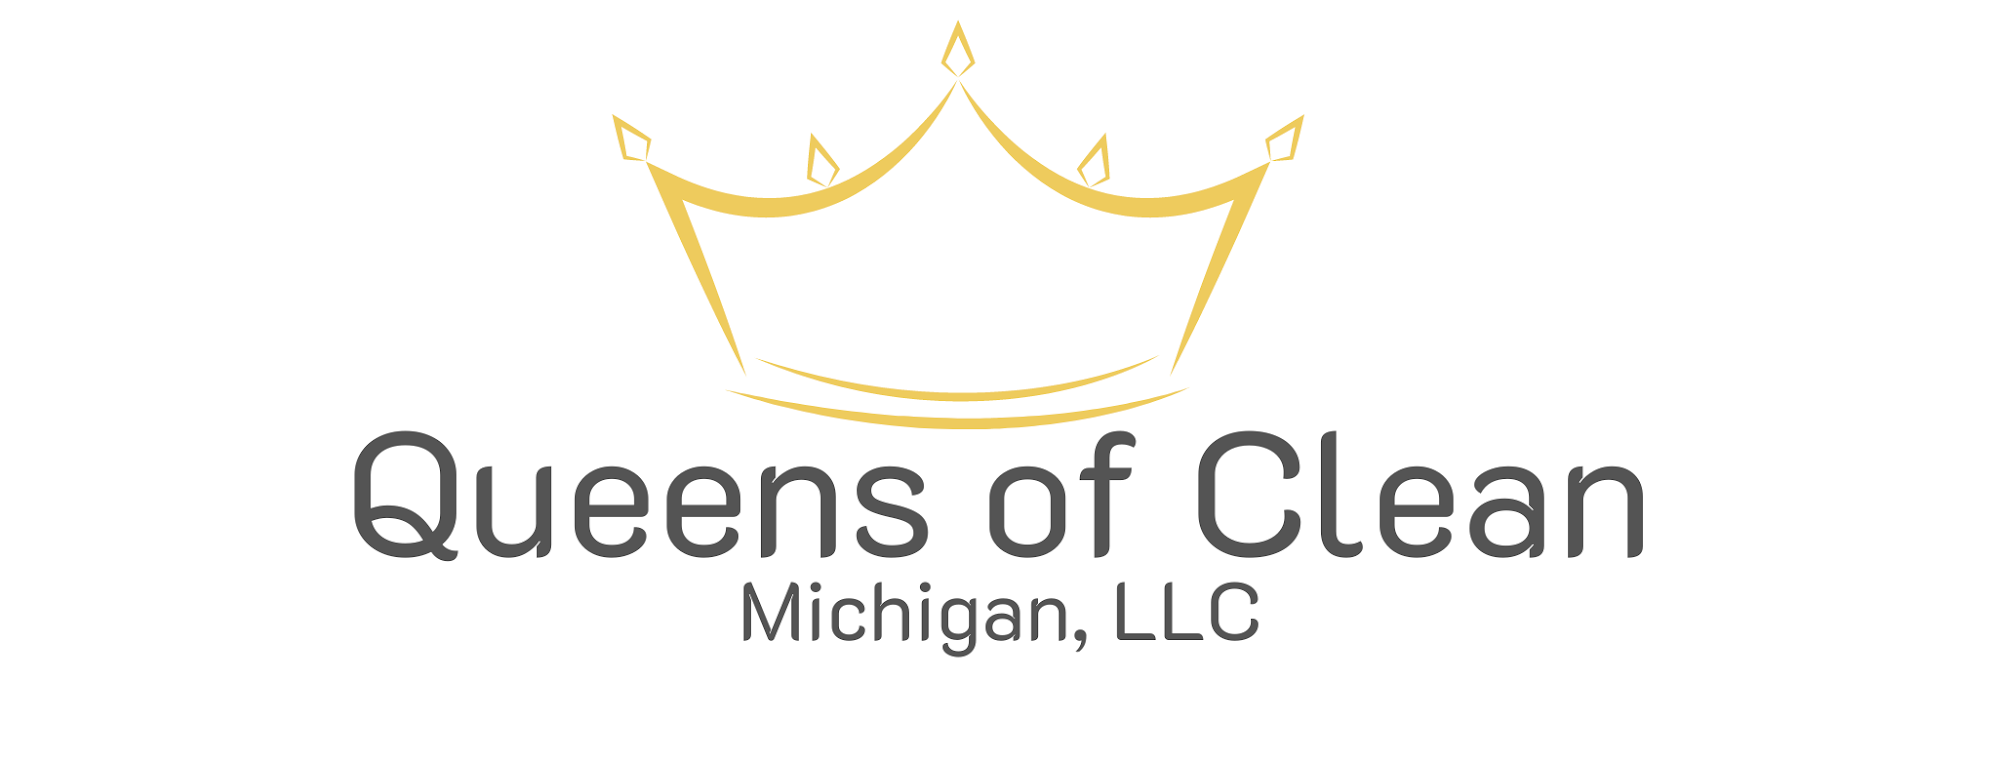 Queens of Clean Michigan, LLC